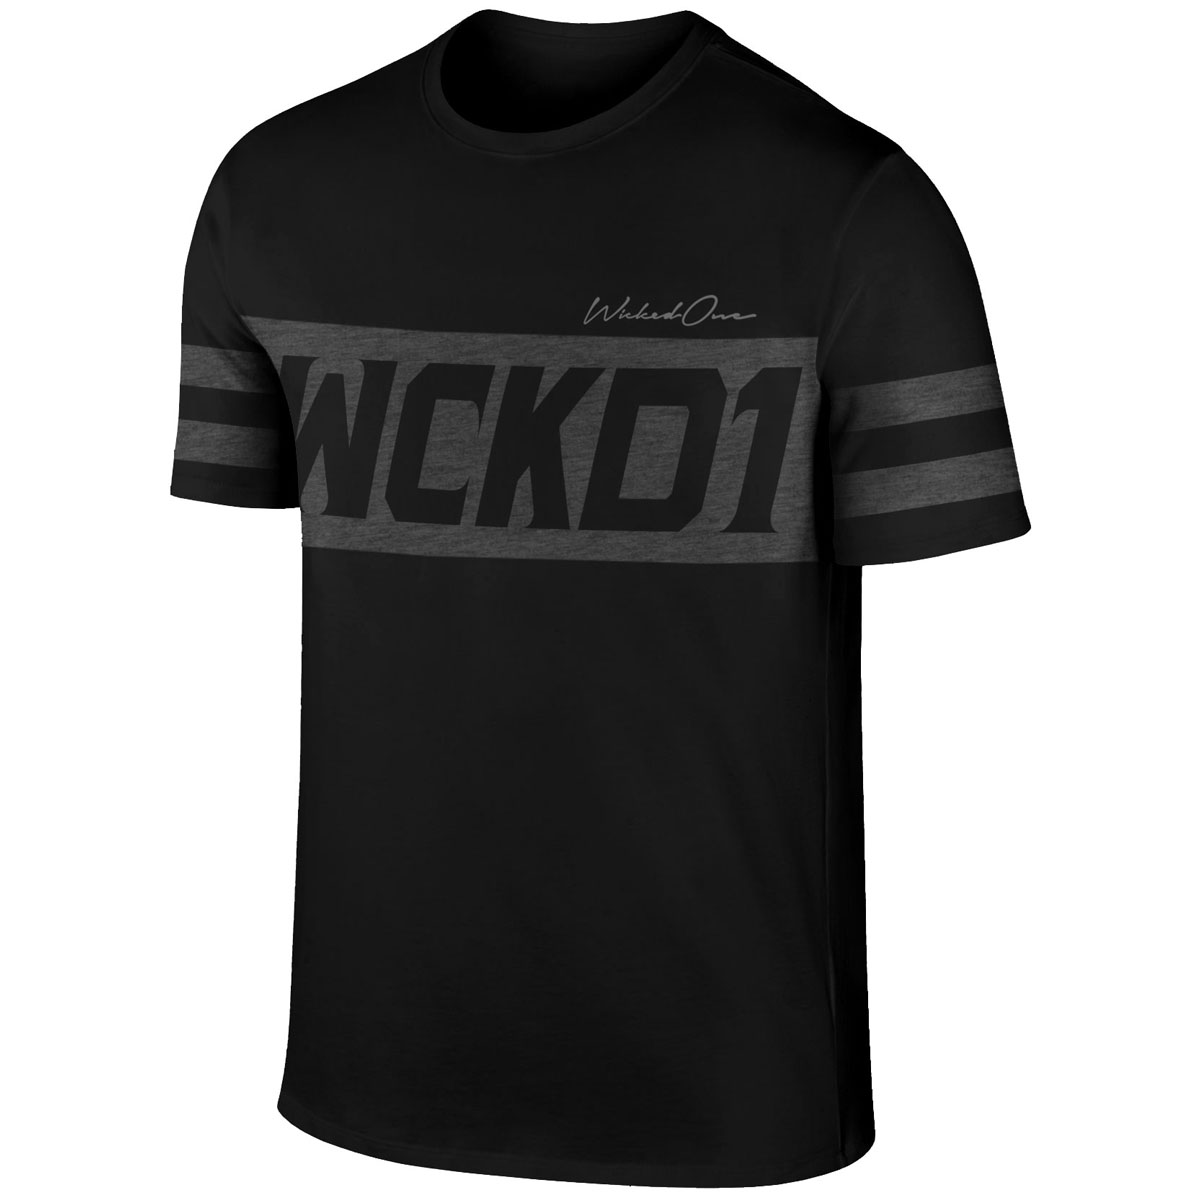 Wicked One T-Shirt, Tracker, black